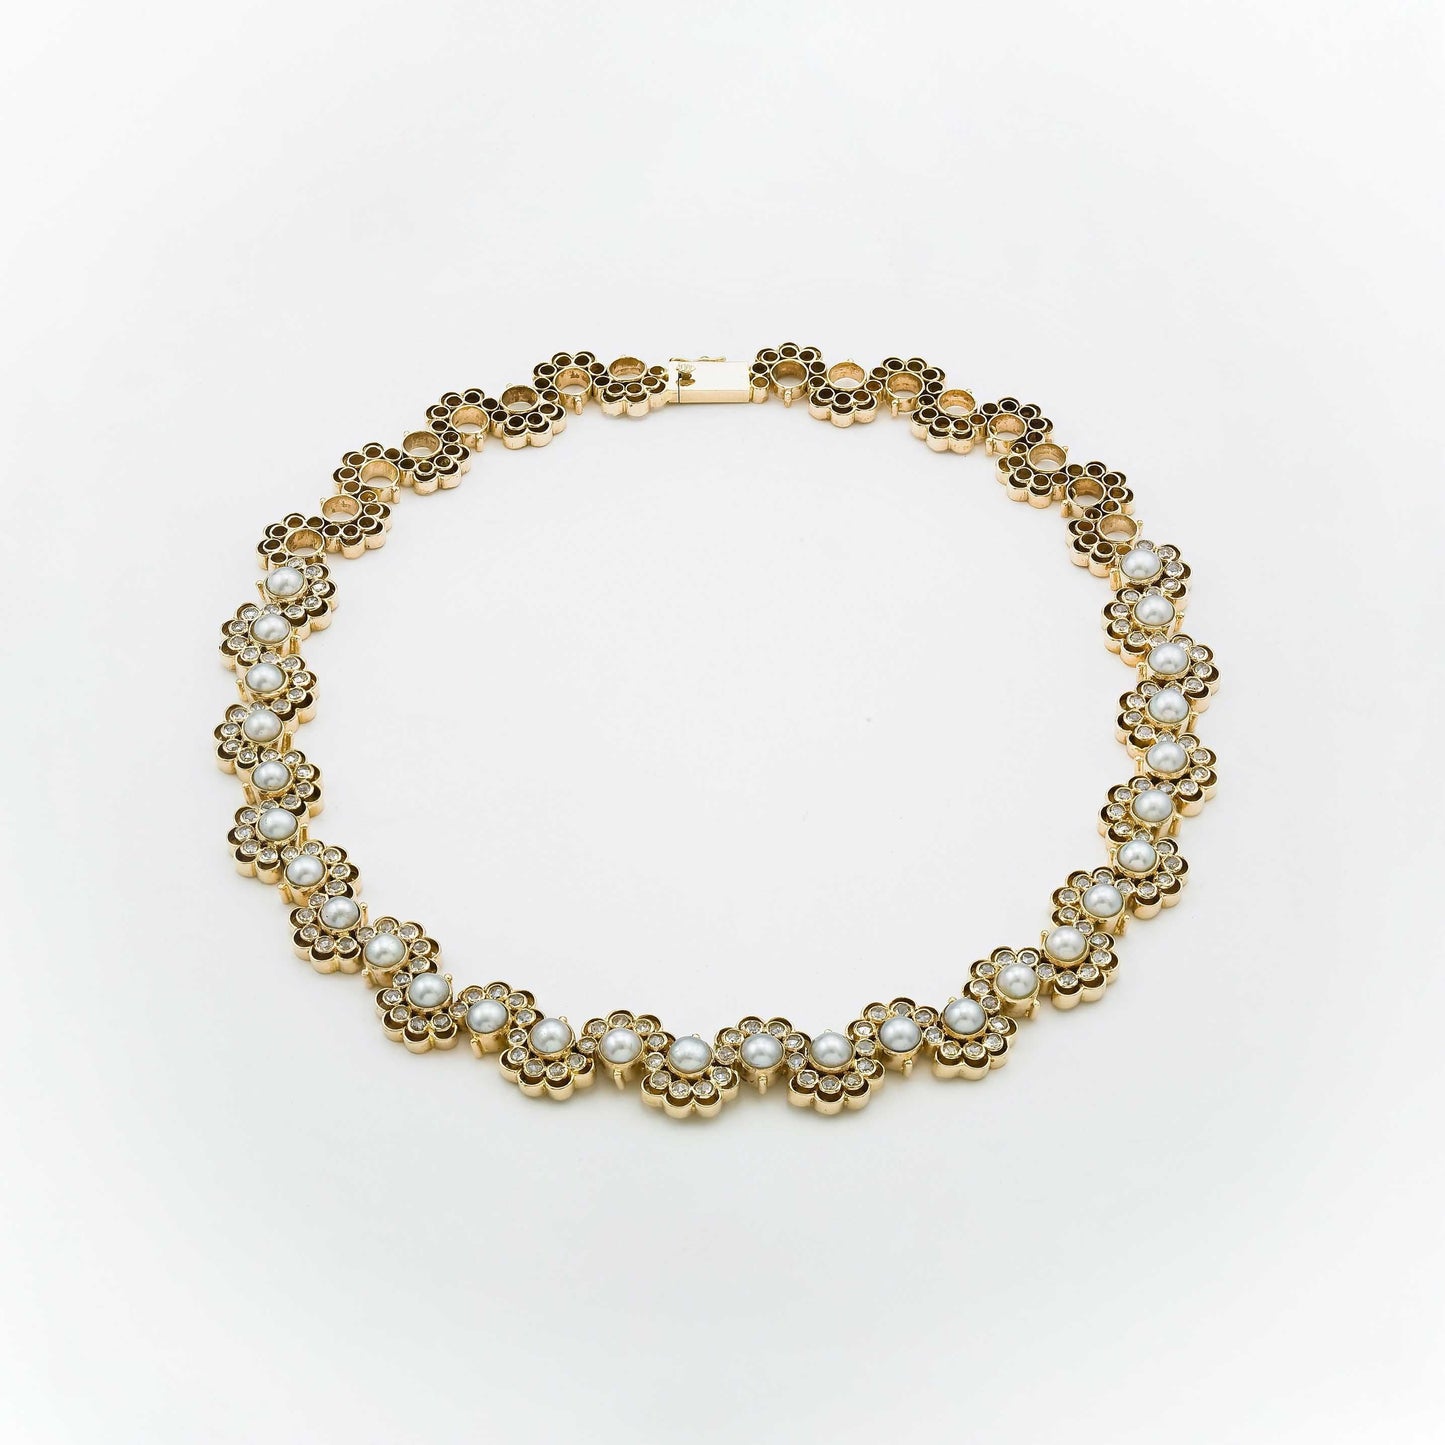 The Kesari Gold, Diamond and Pearl Necklace by Rasvihar